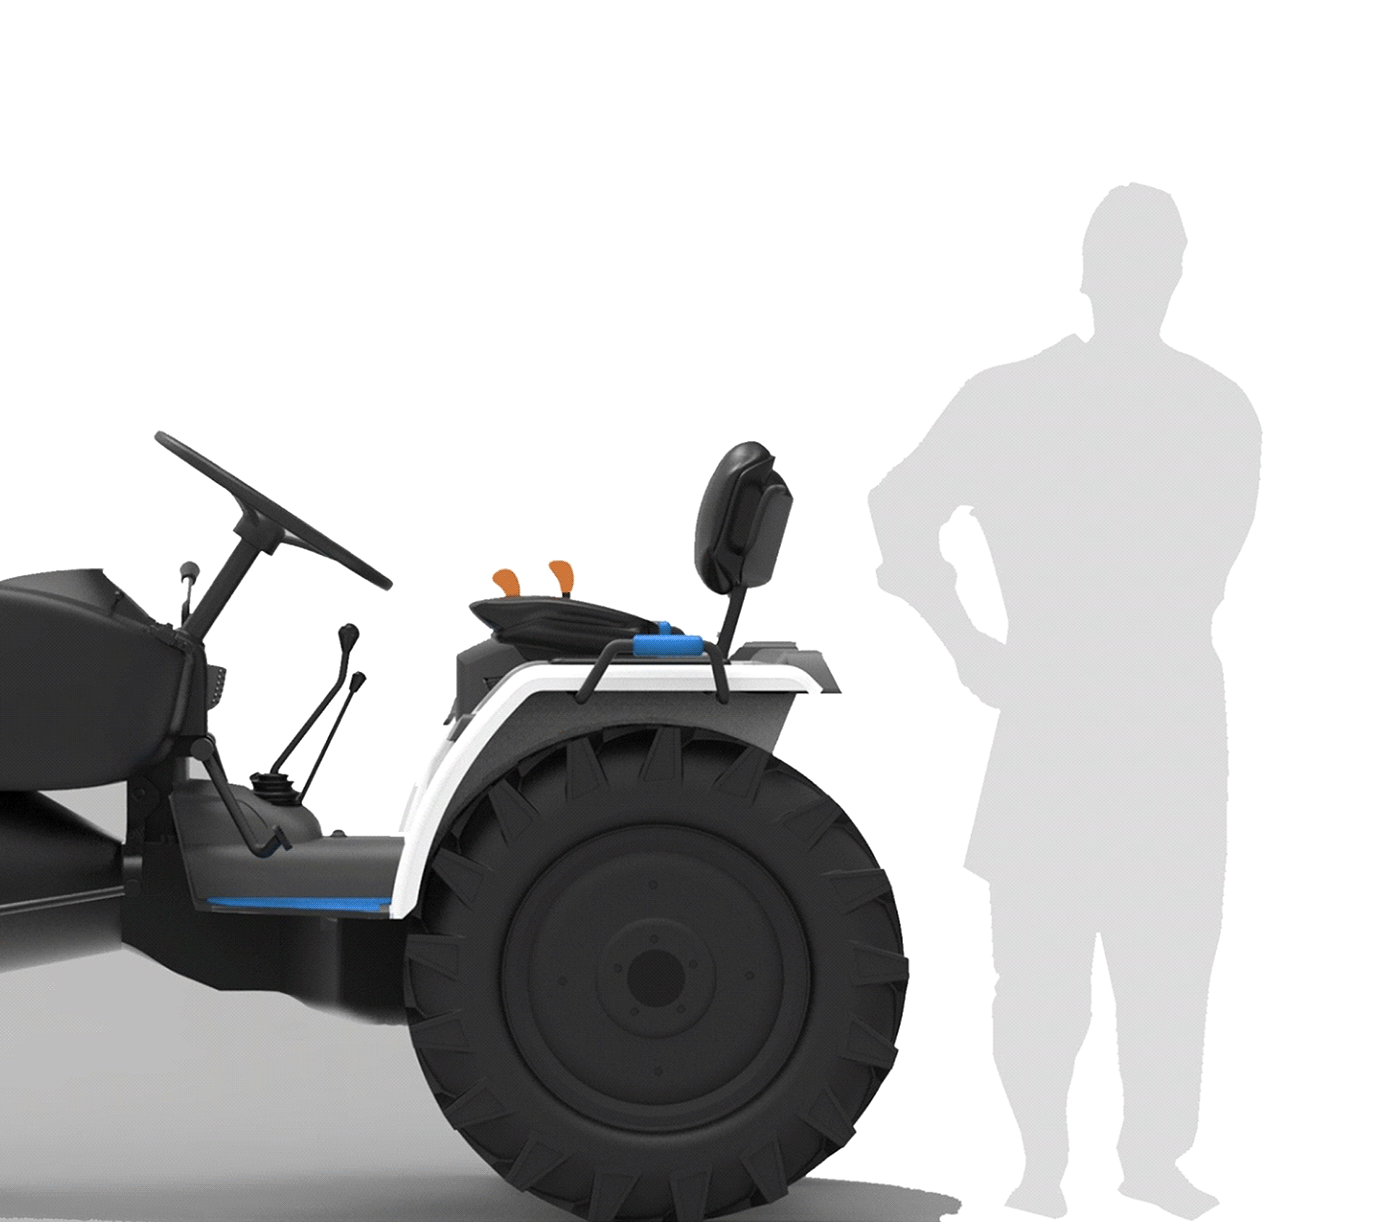 Adobe Portfolio Tractor mini tractor workspace Interior transportation